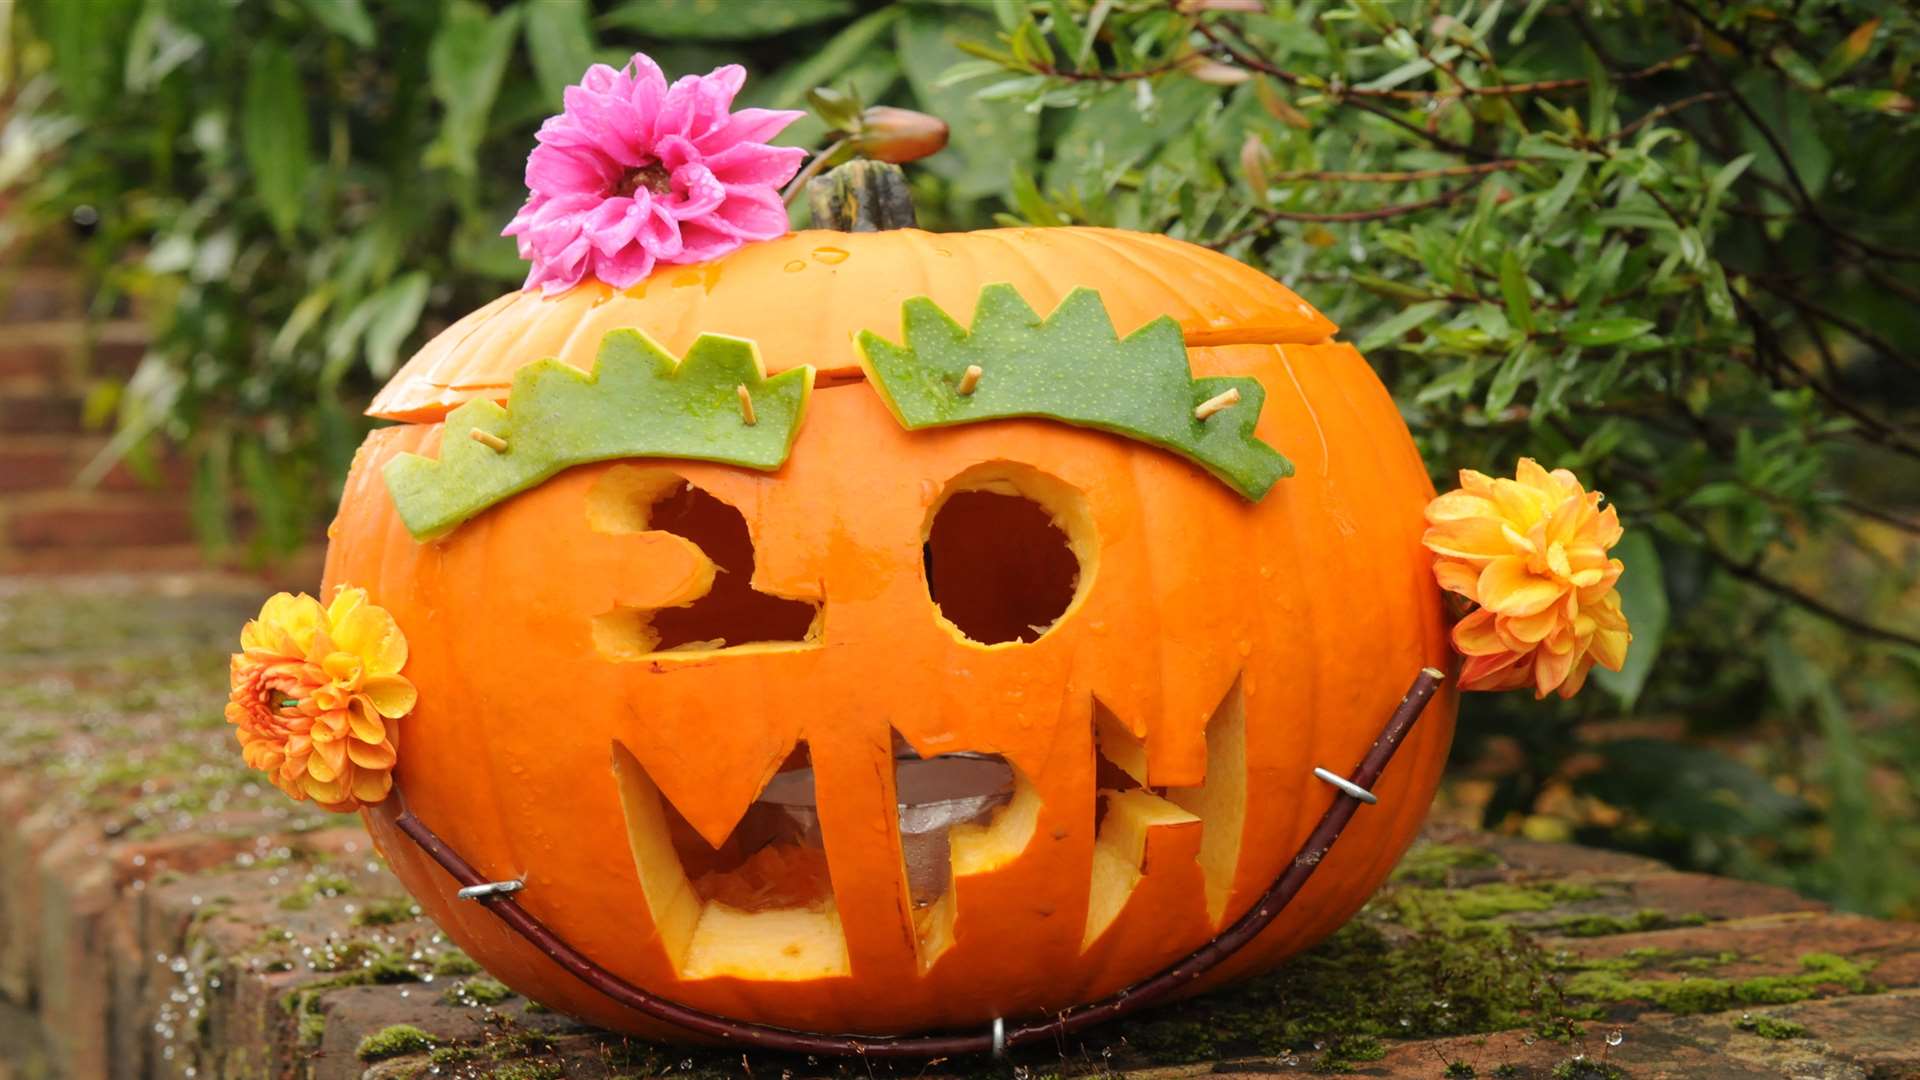 Fancy a spot of pumpkin carving this weekend?